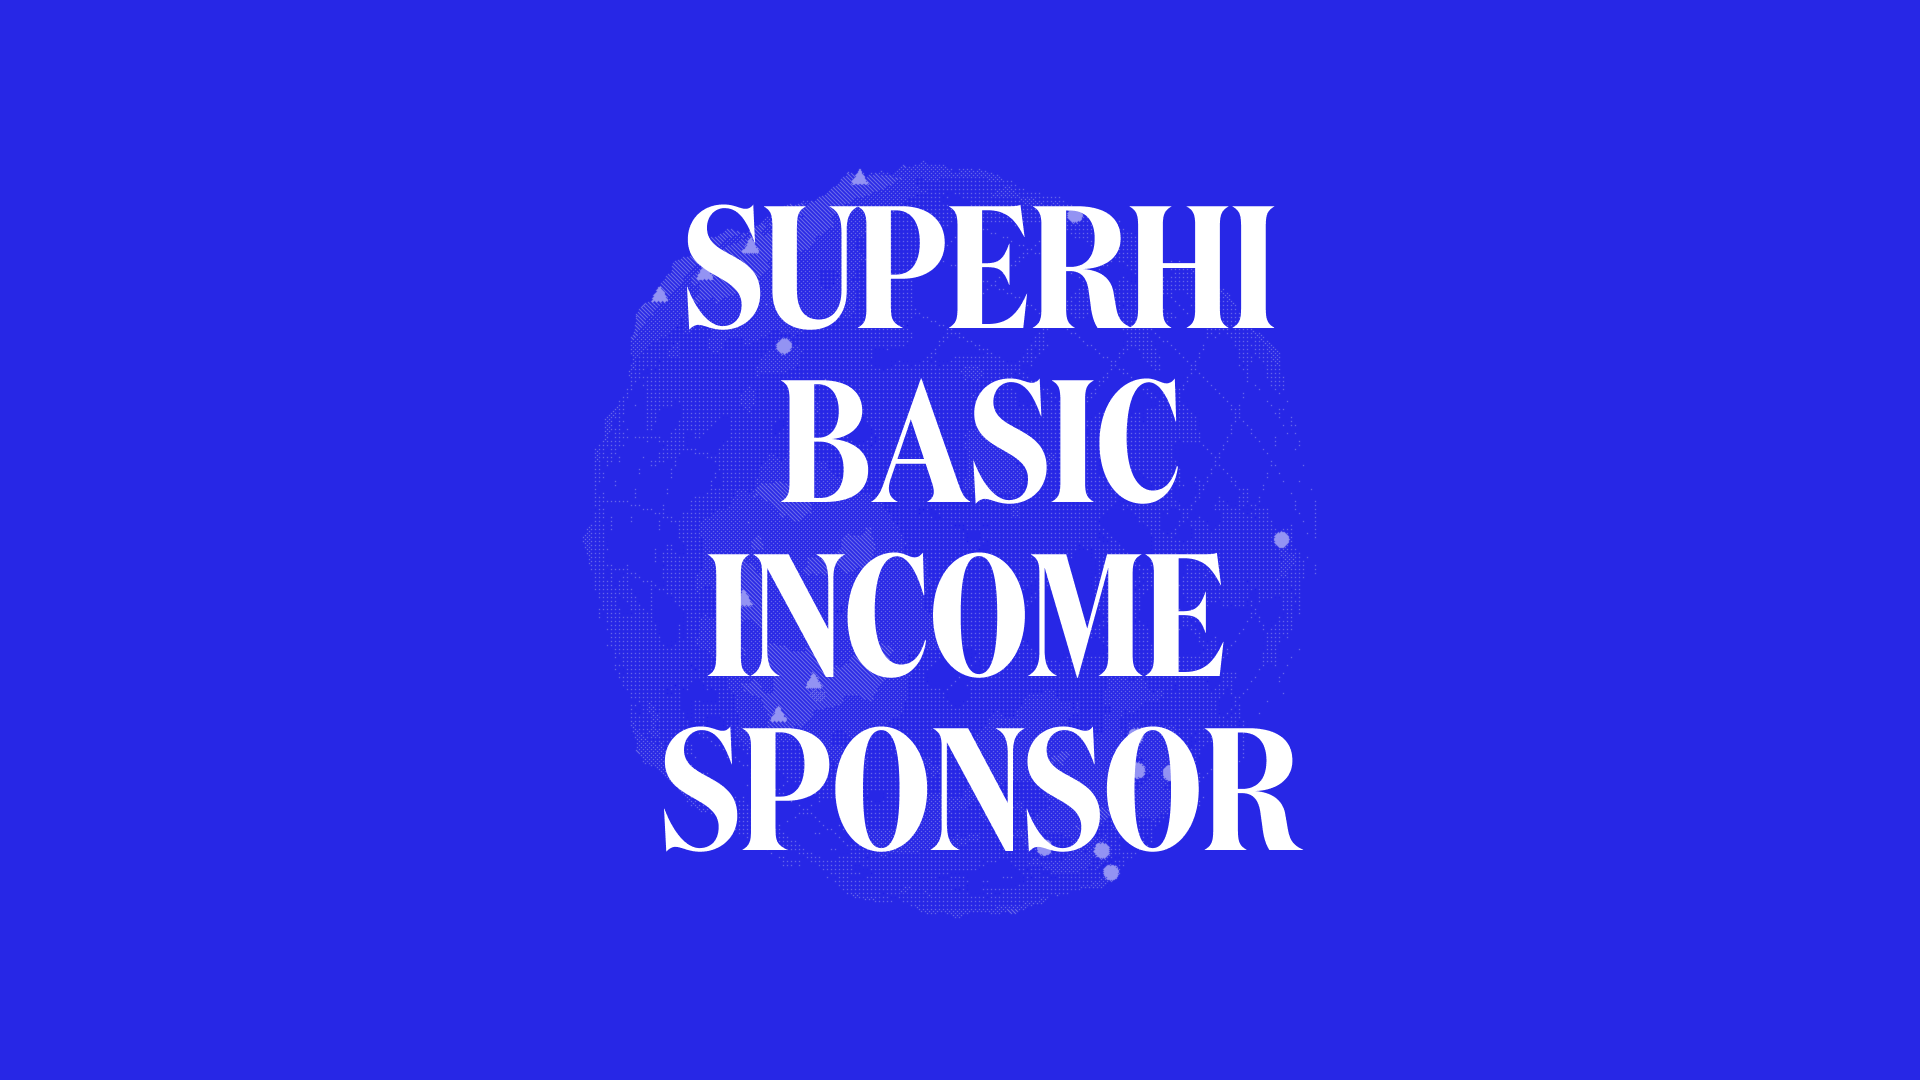 SuperHi Basic Income Sponsor #20